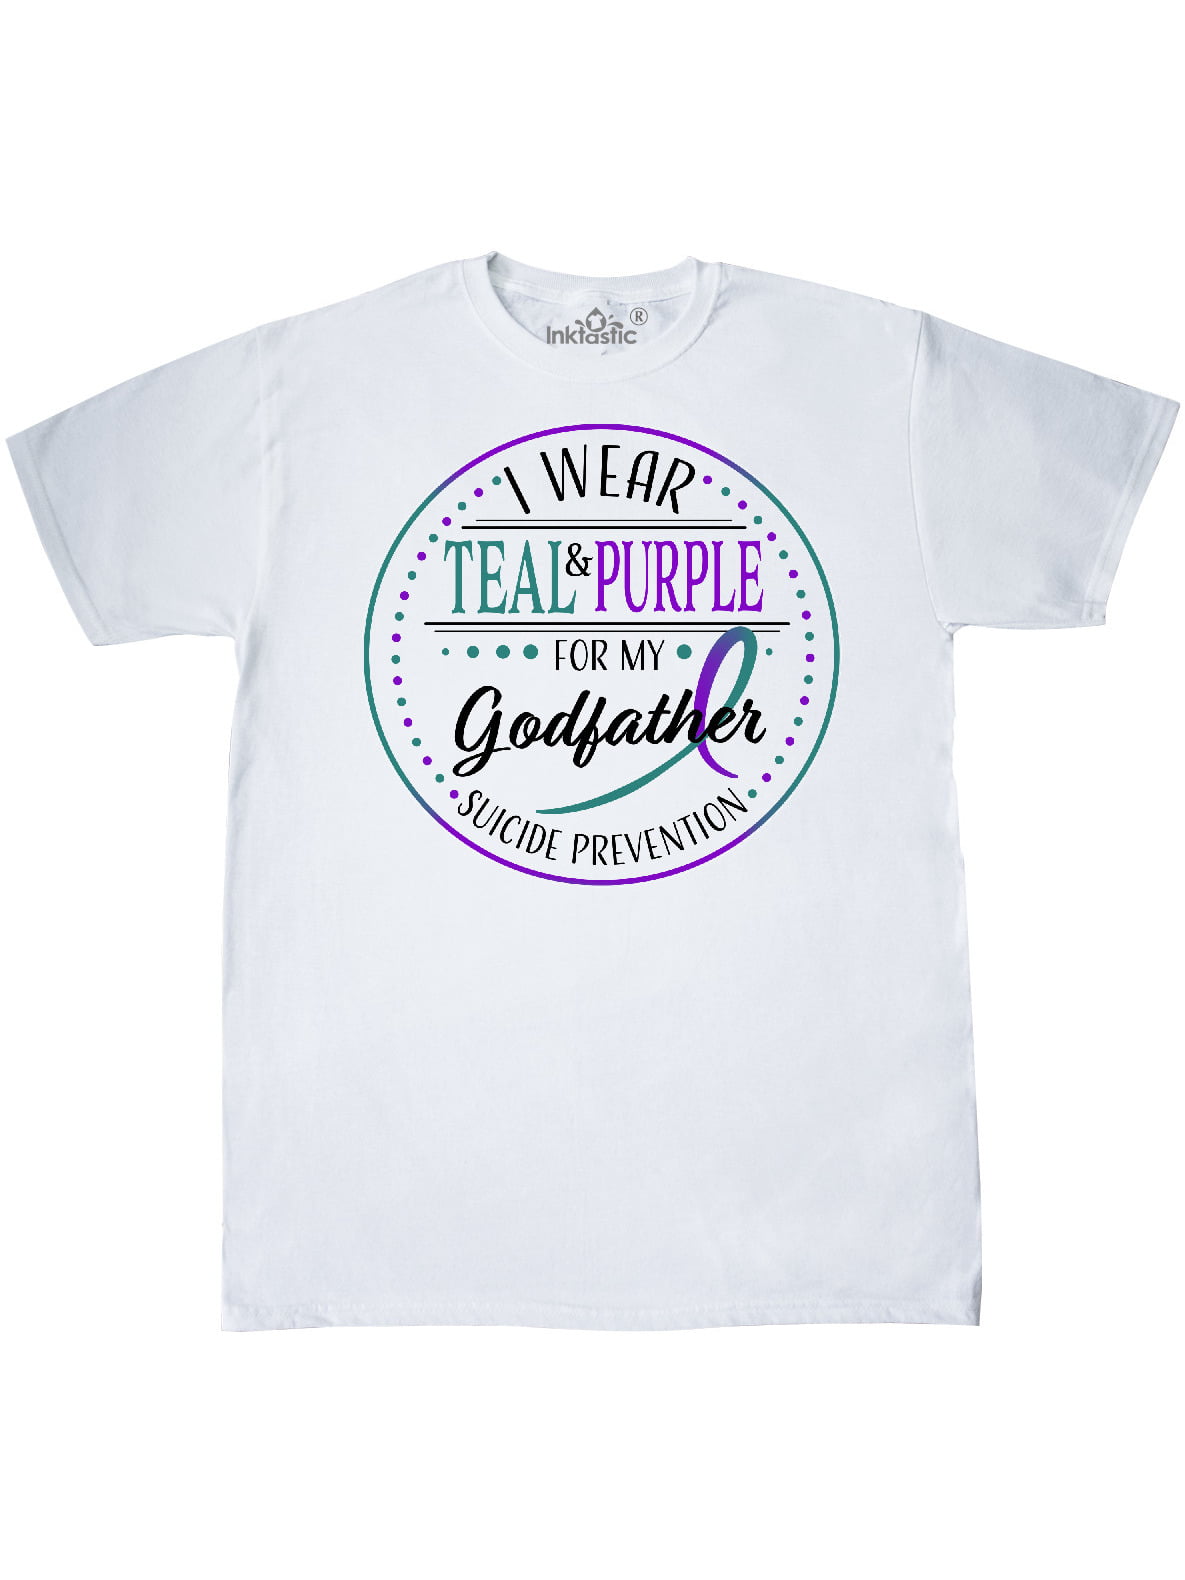 teal shirt with purple writing